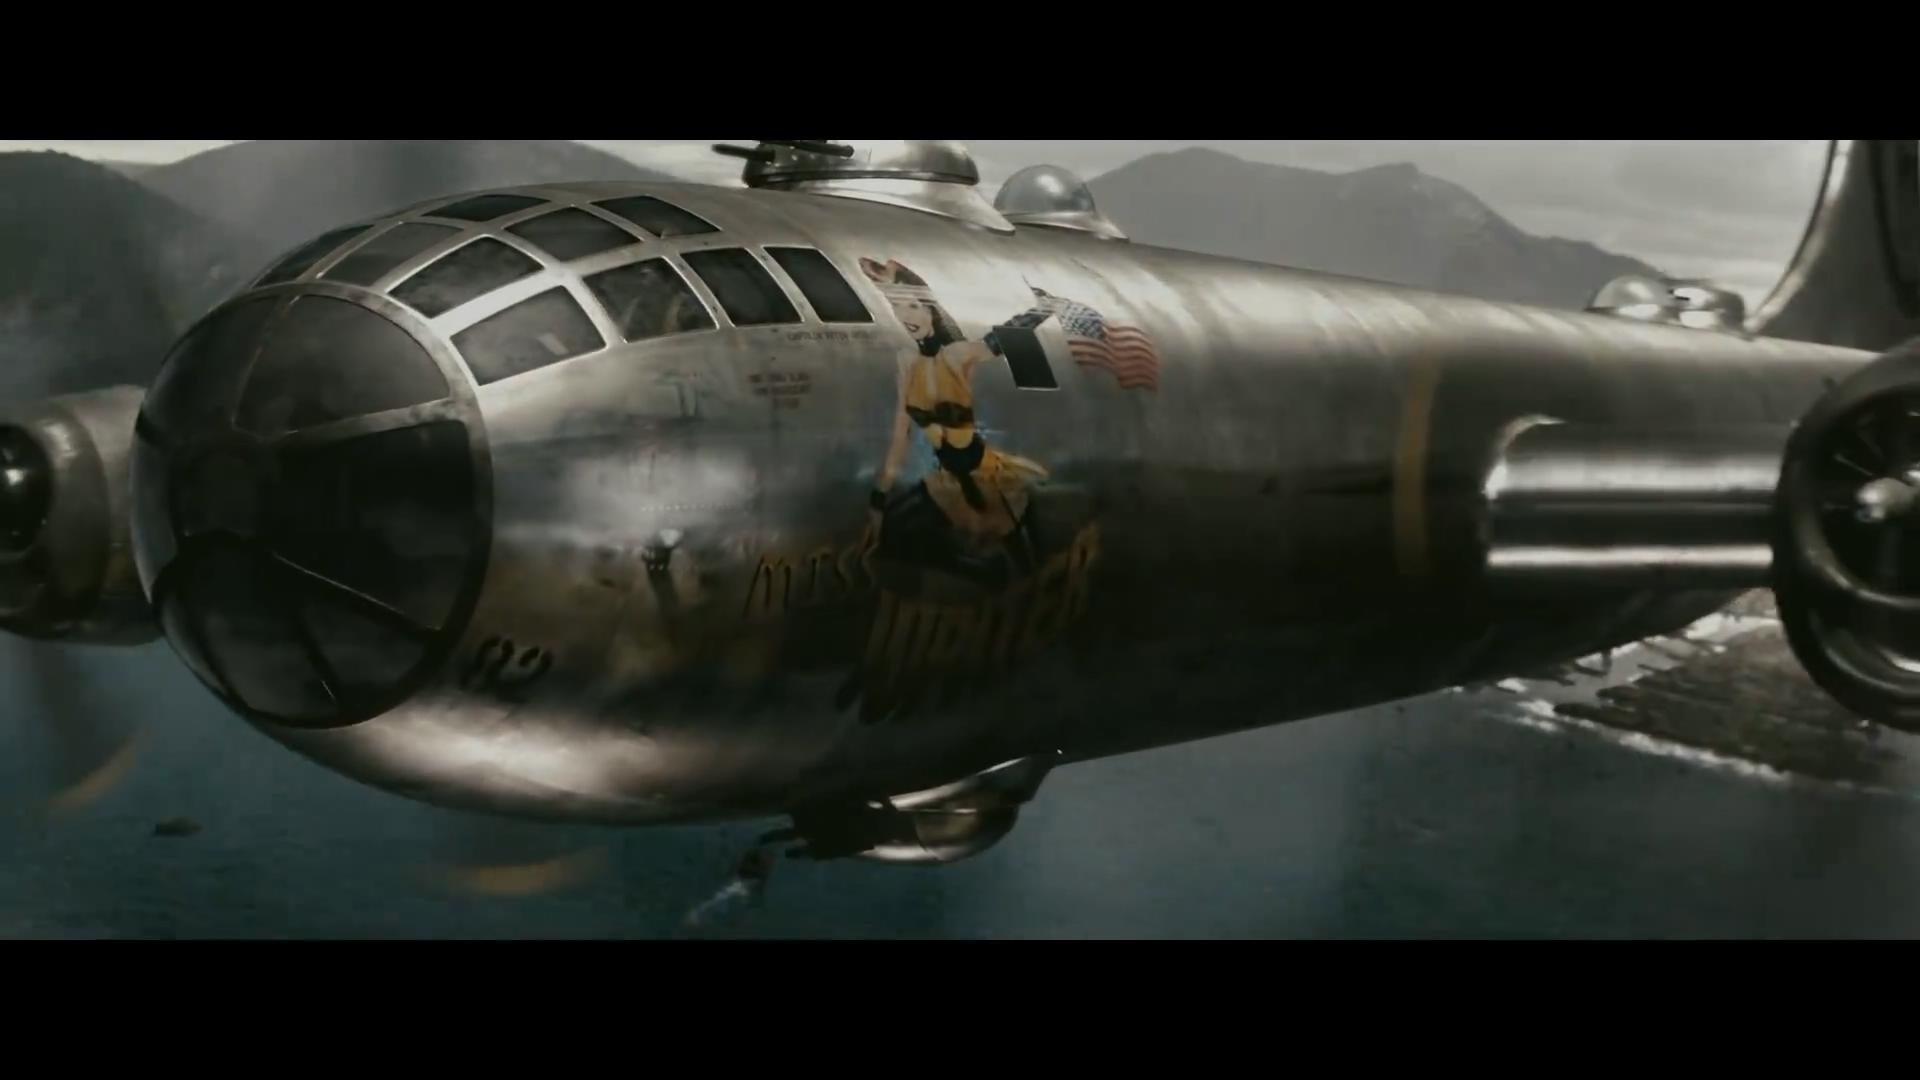 b29轰炸机上有丝灵的画像,飞机往日本投放原子弹